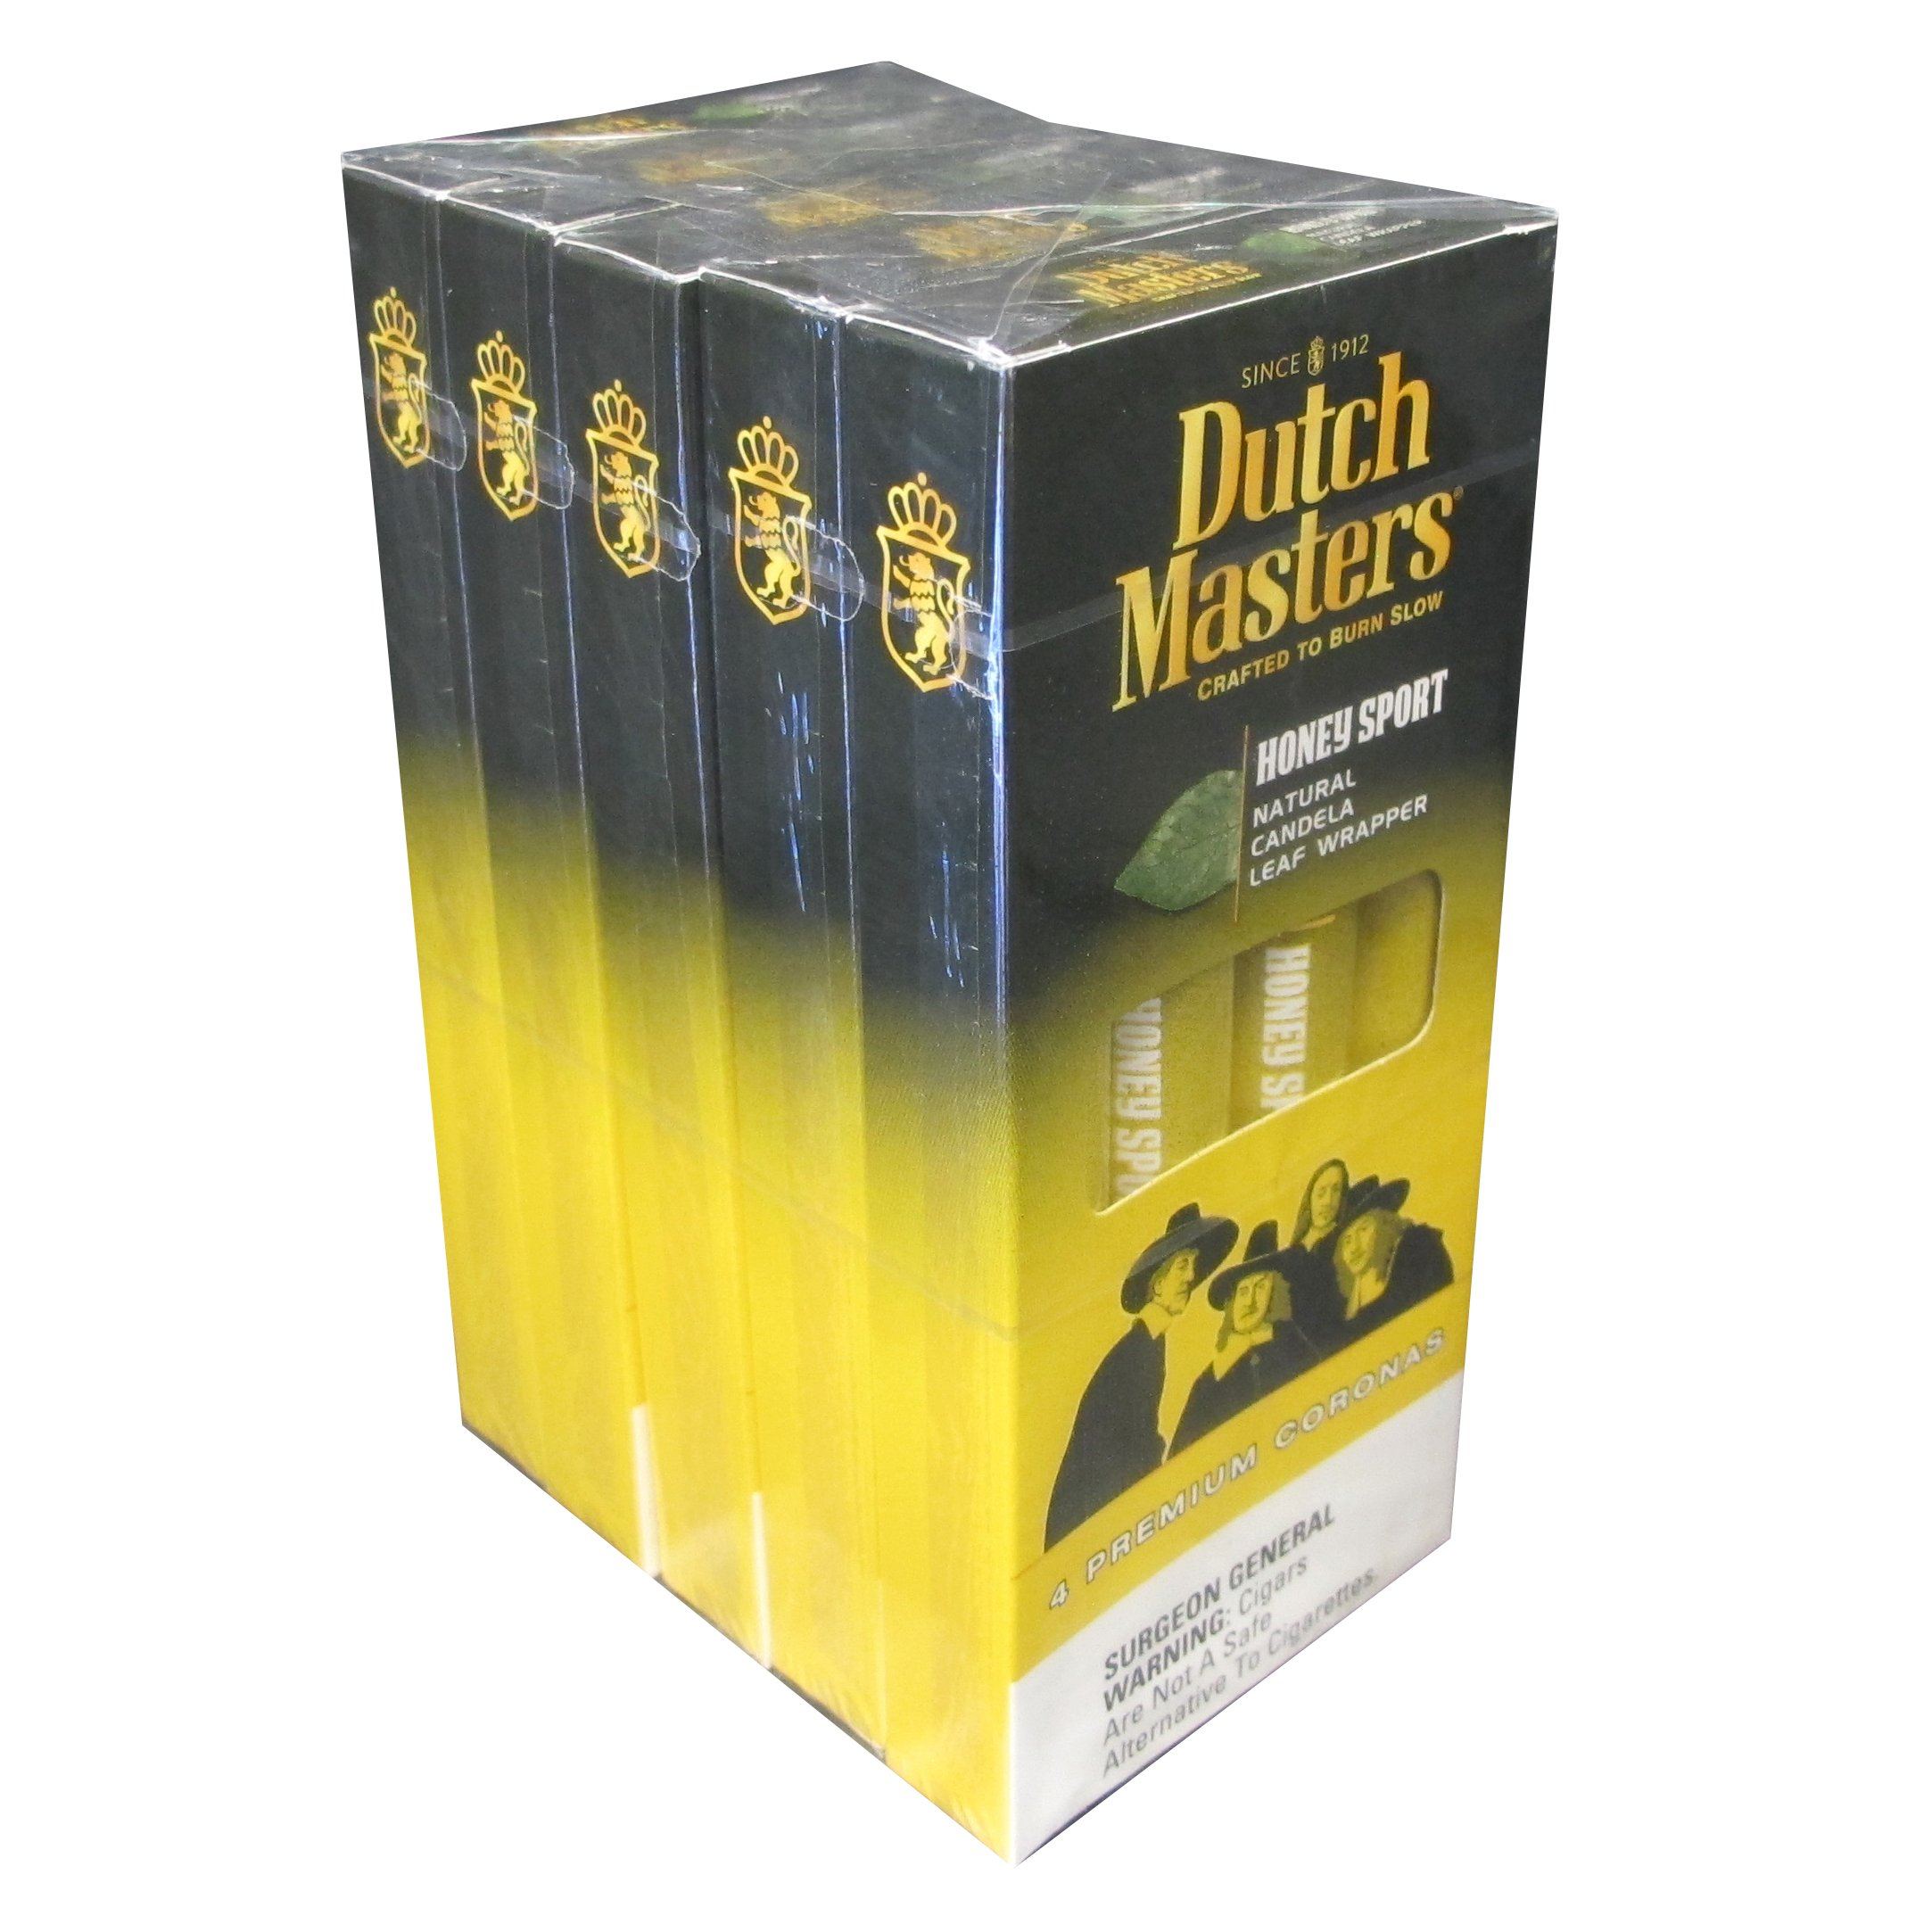 Dutch Masters Honey Sports Cigars Bnb Tobacco